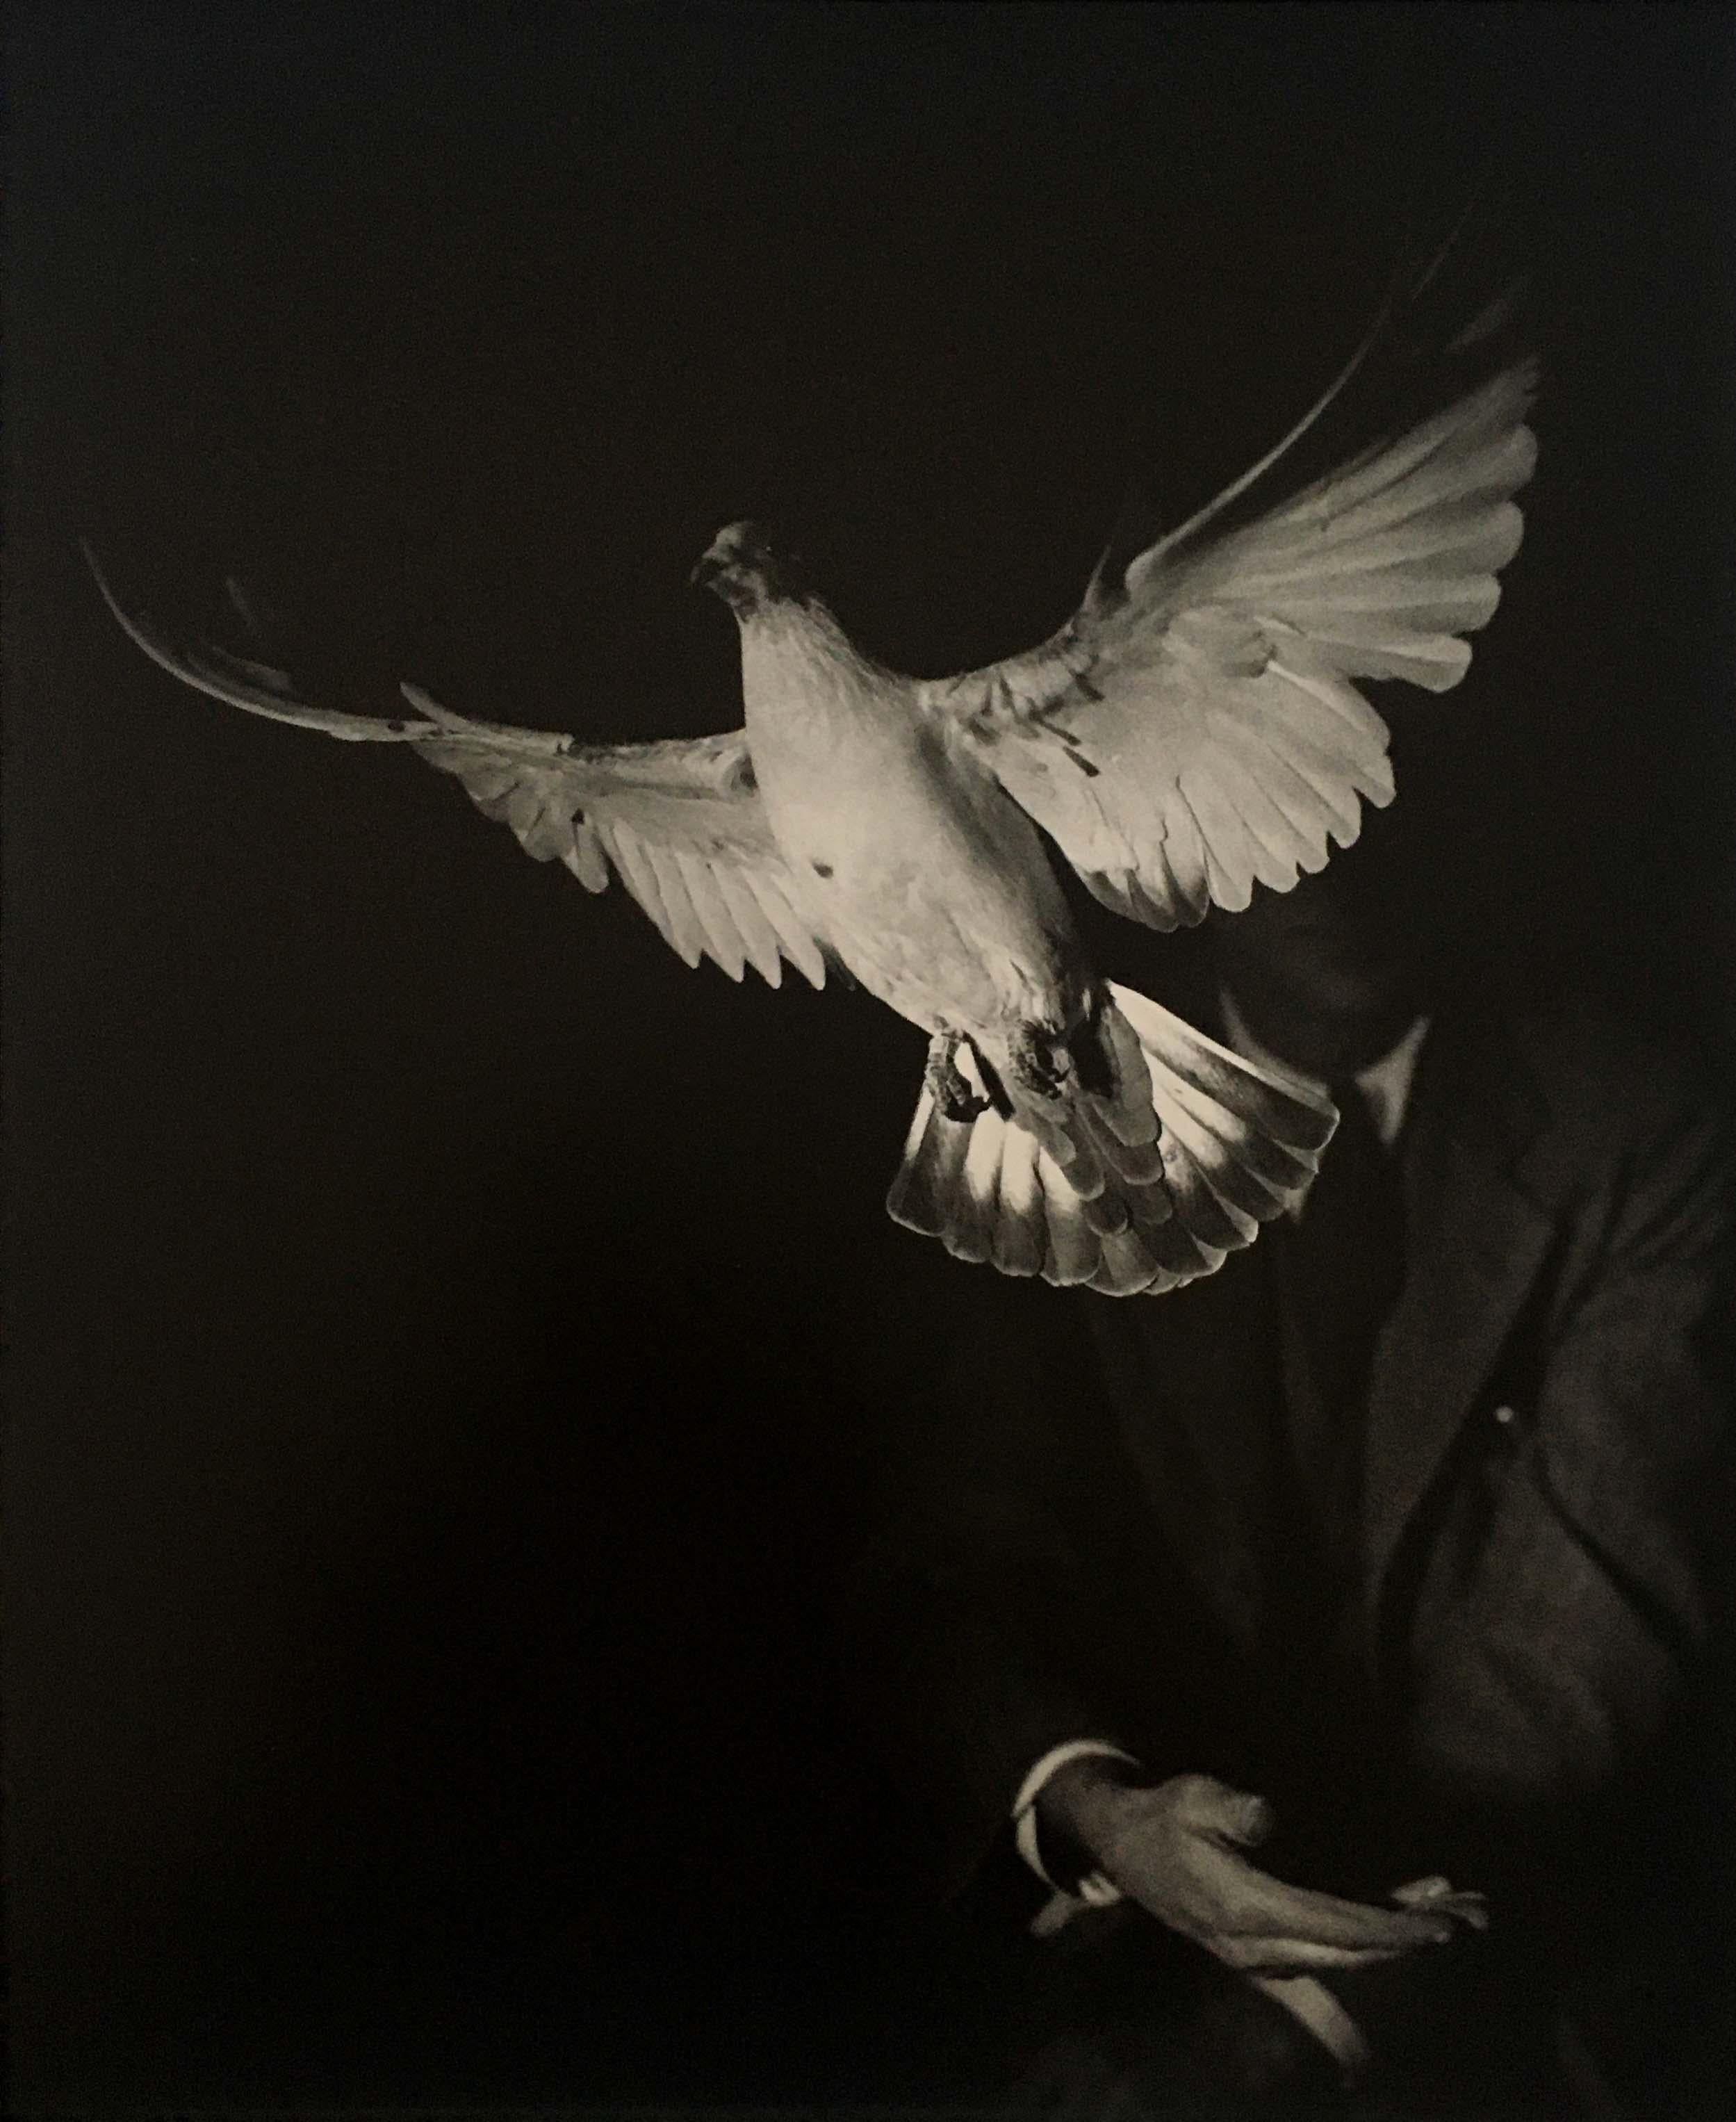 Harold Edgerton Figurative Photograph - Dove in Flight